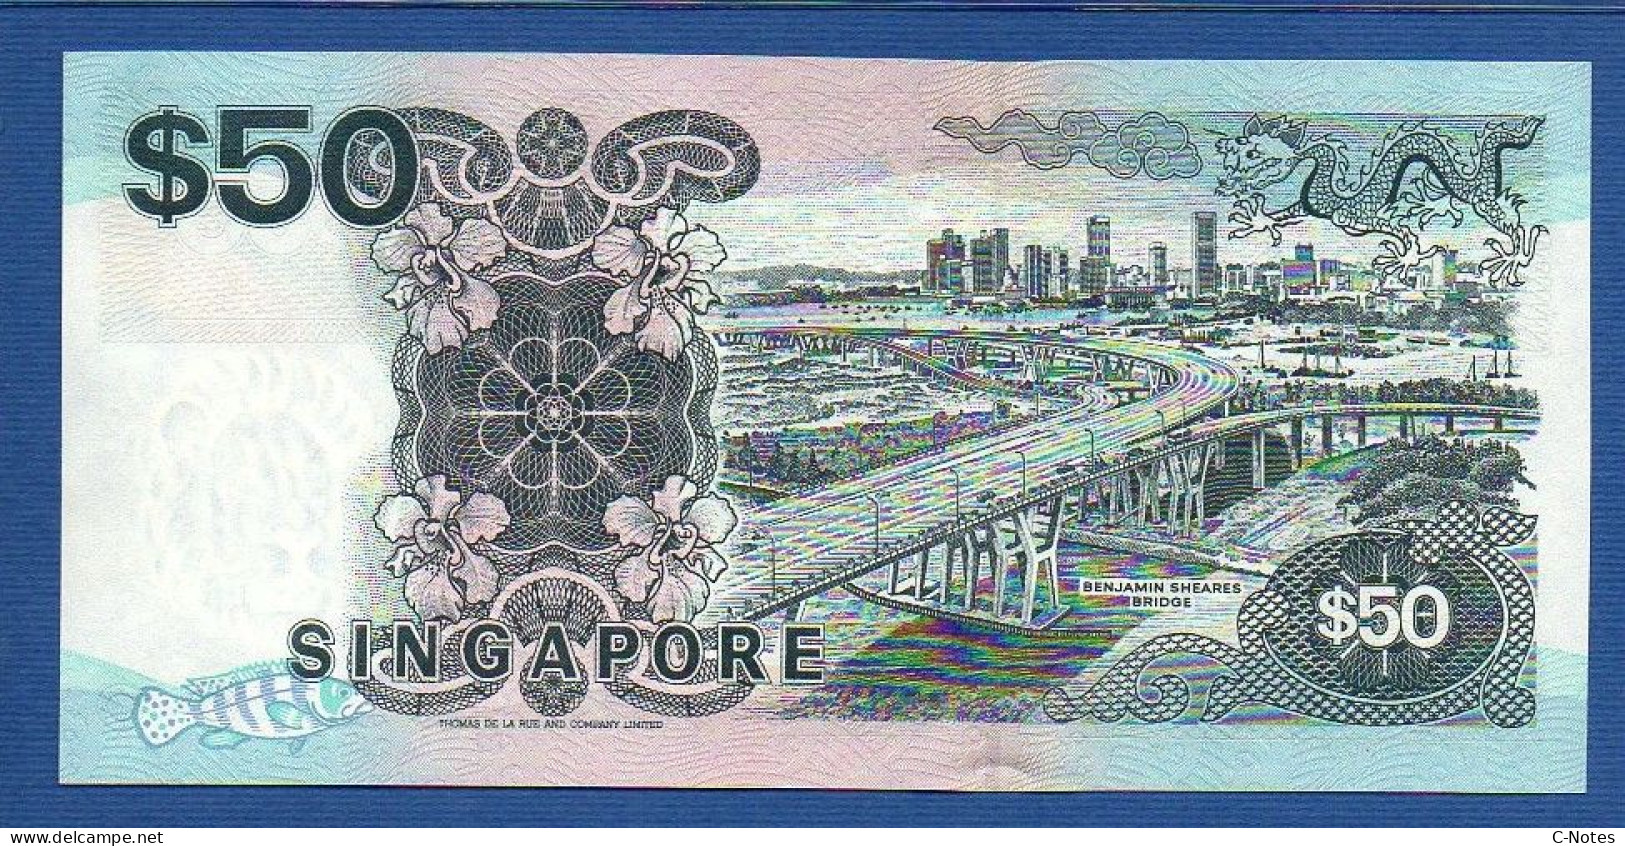 SINGAPORE - P.36 – 50 Dollars ND 1994 UNC, S/n D/32 605939 - Singapore